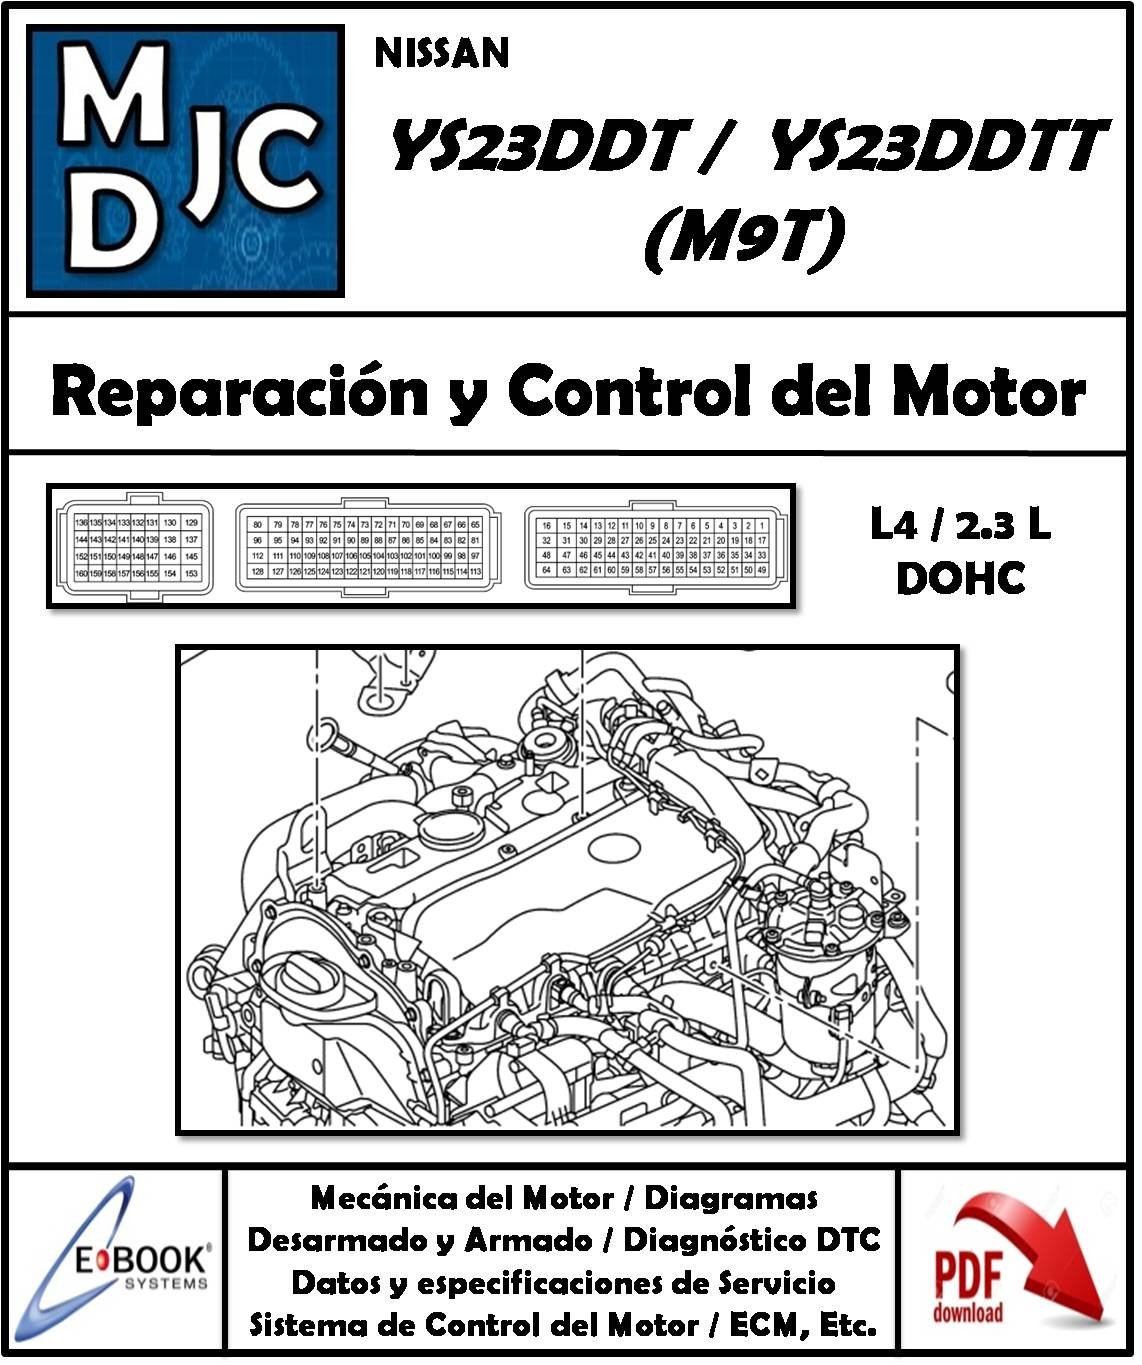 Nissan YS23DDT / YS23DDTT / M9T / L4 DOHC (Diesel) 2.3 L / D23)